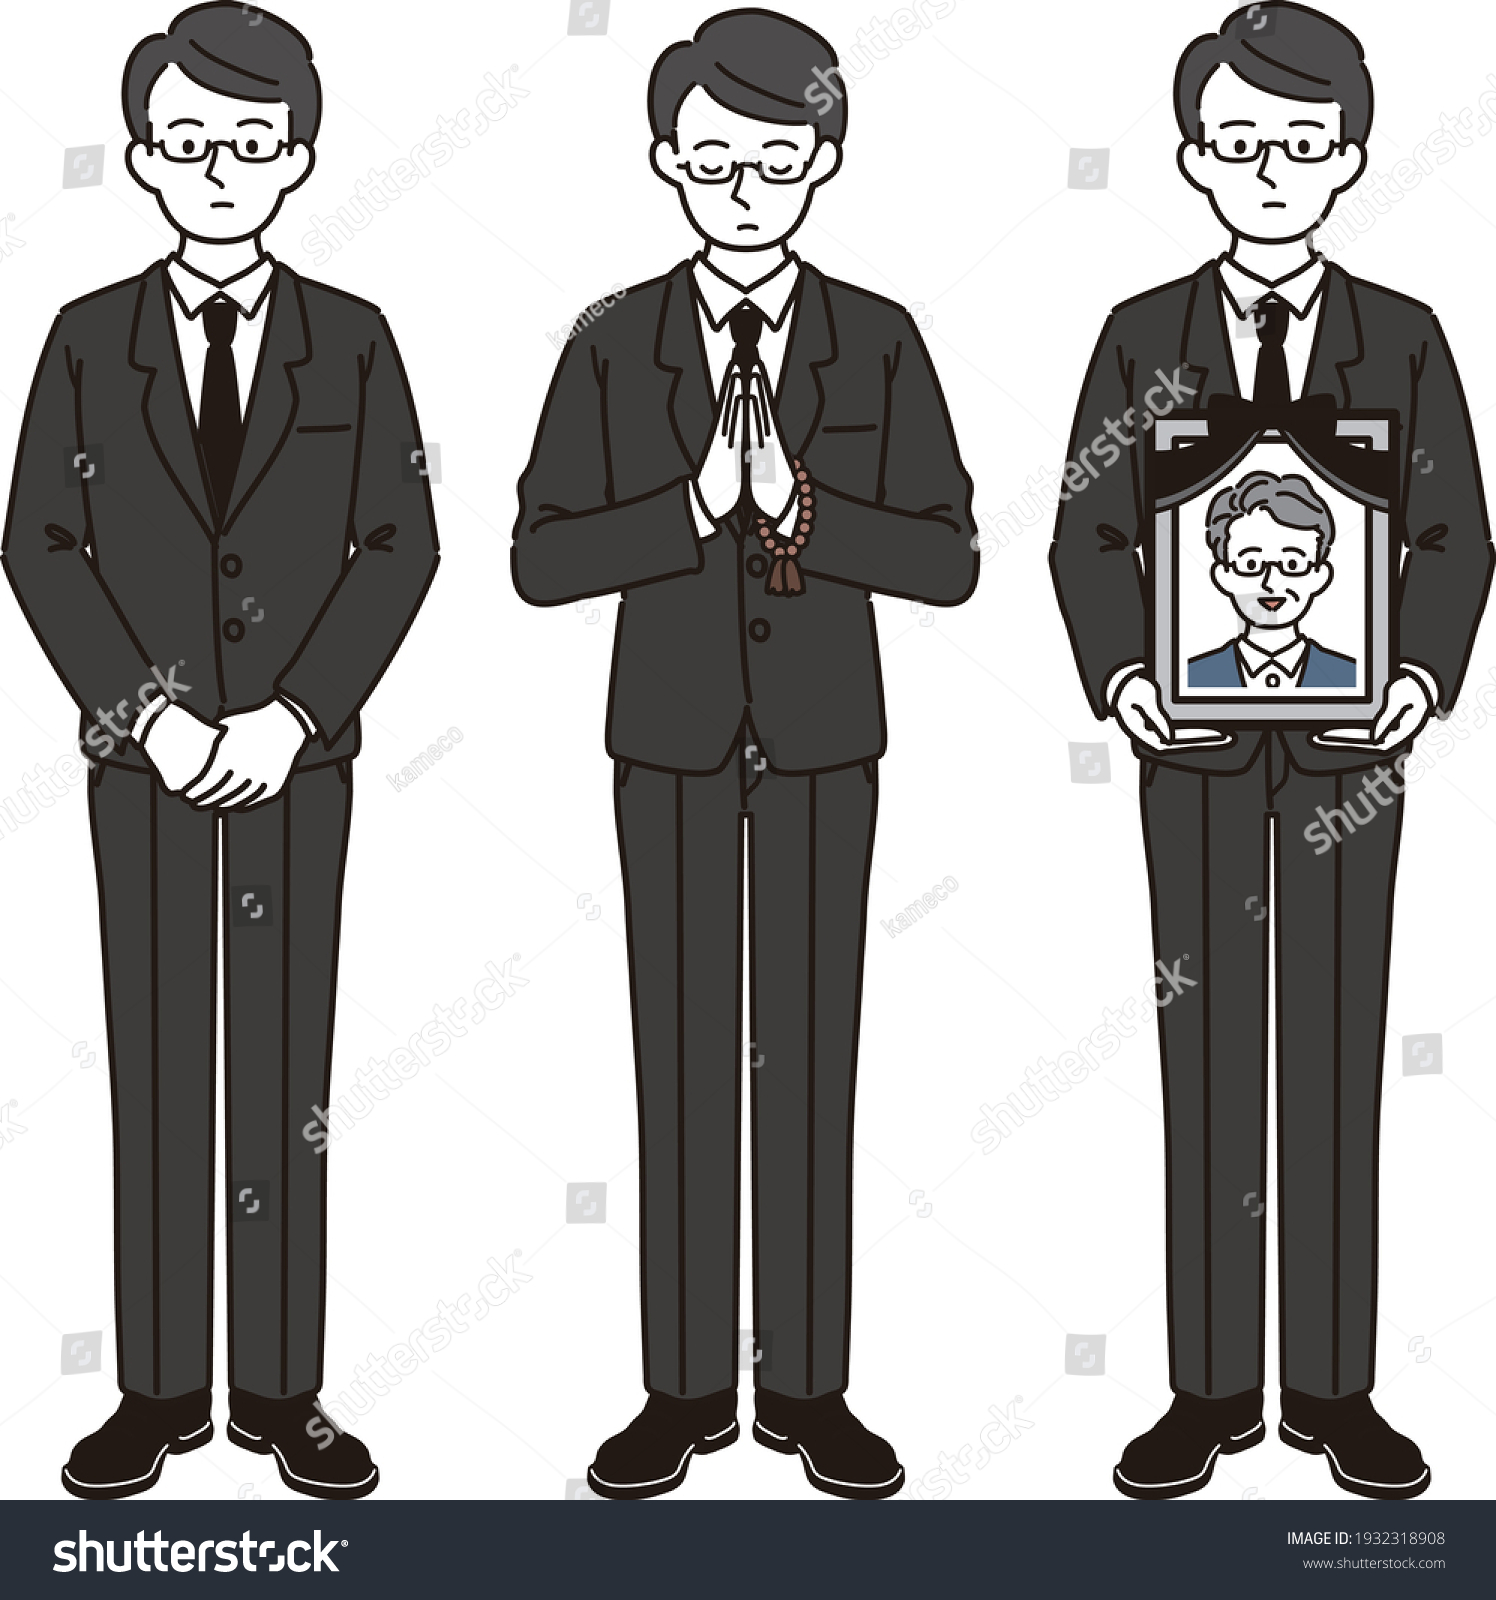 SVG of 3 sets of men in mourning clothes svg